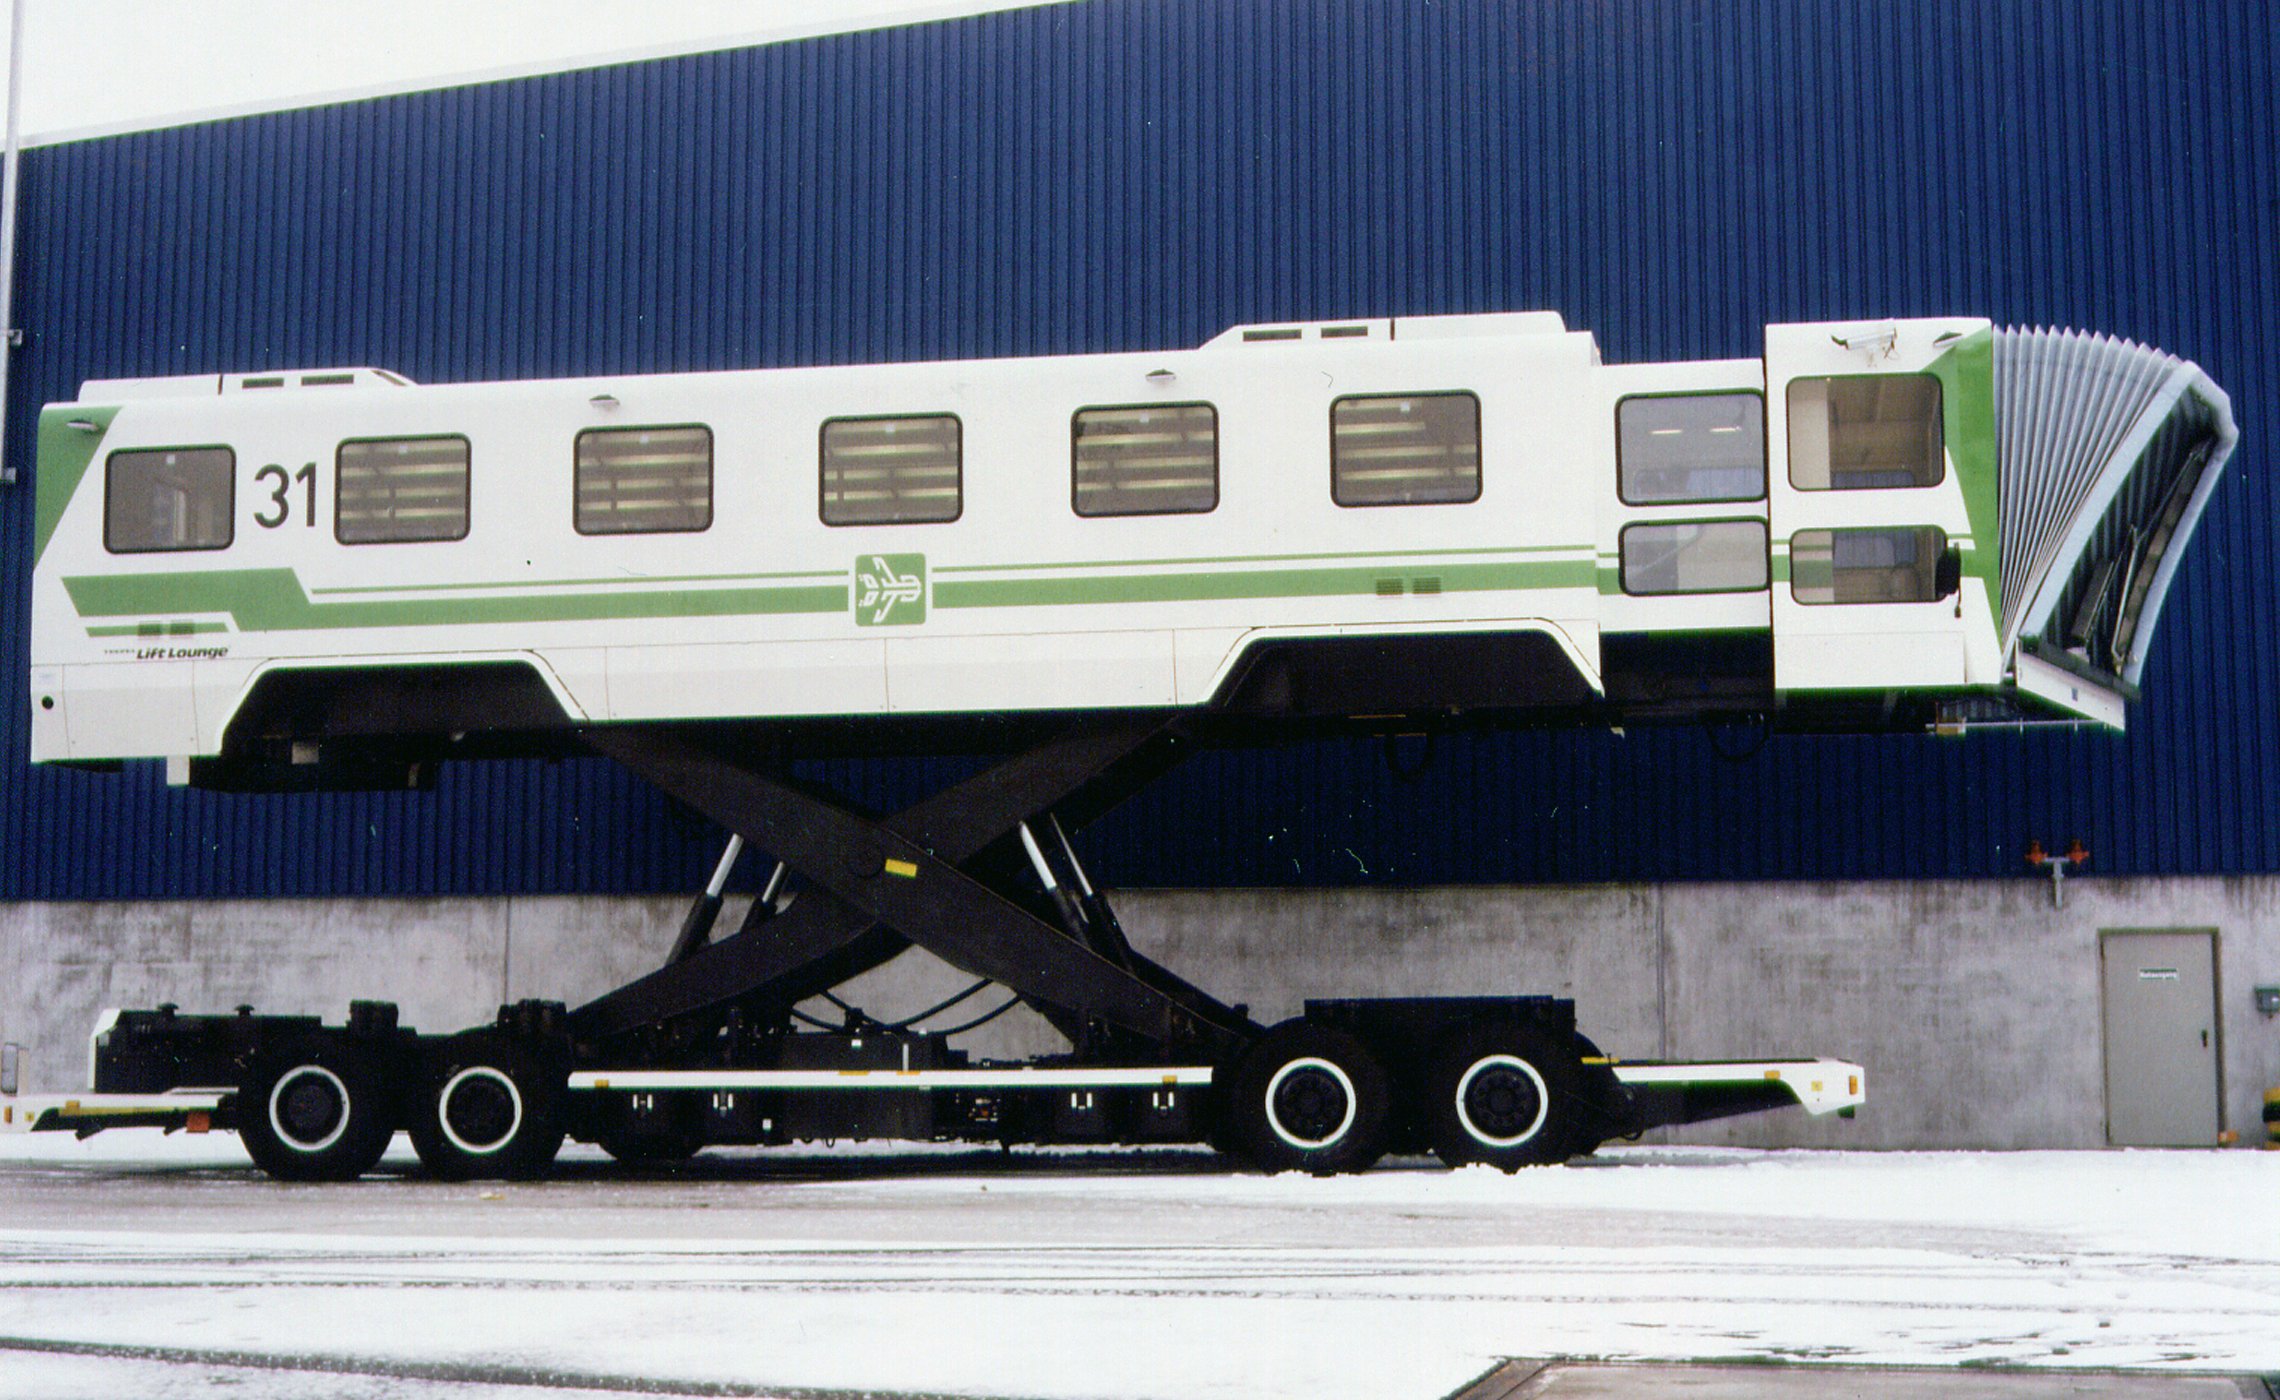 TREPEL Airport Equipment - History 1985